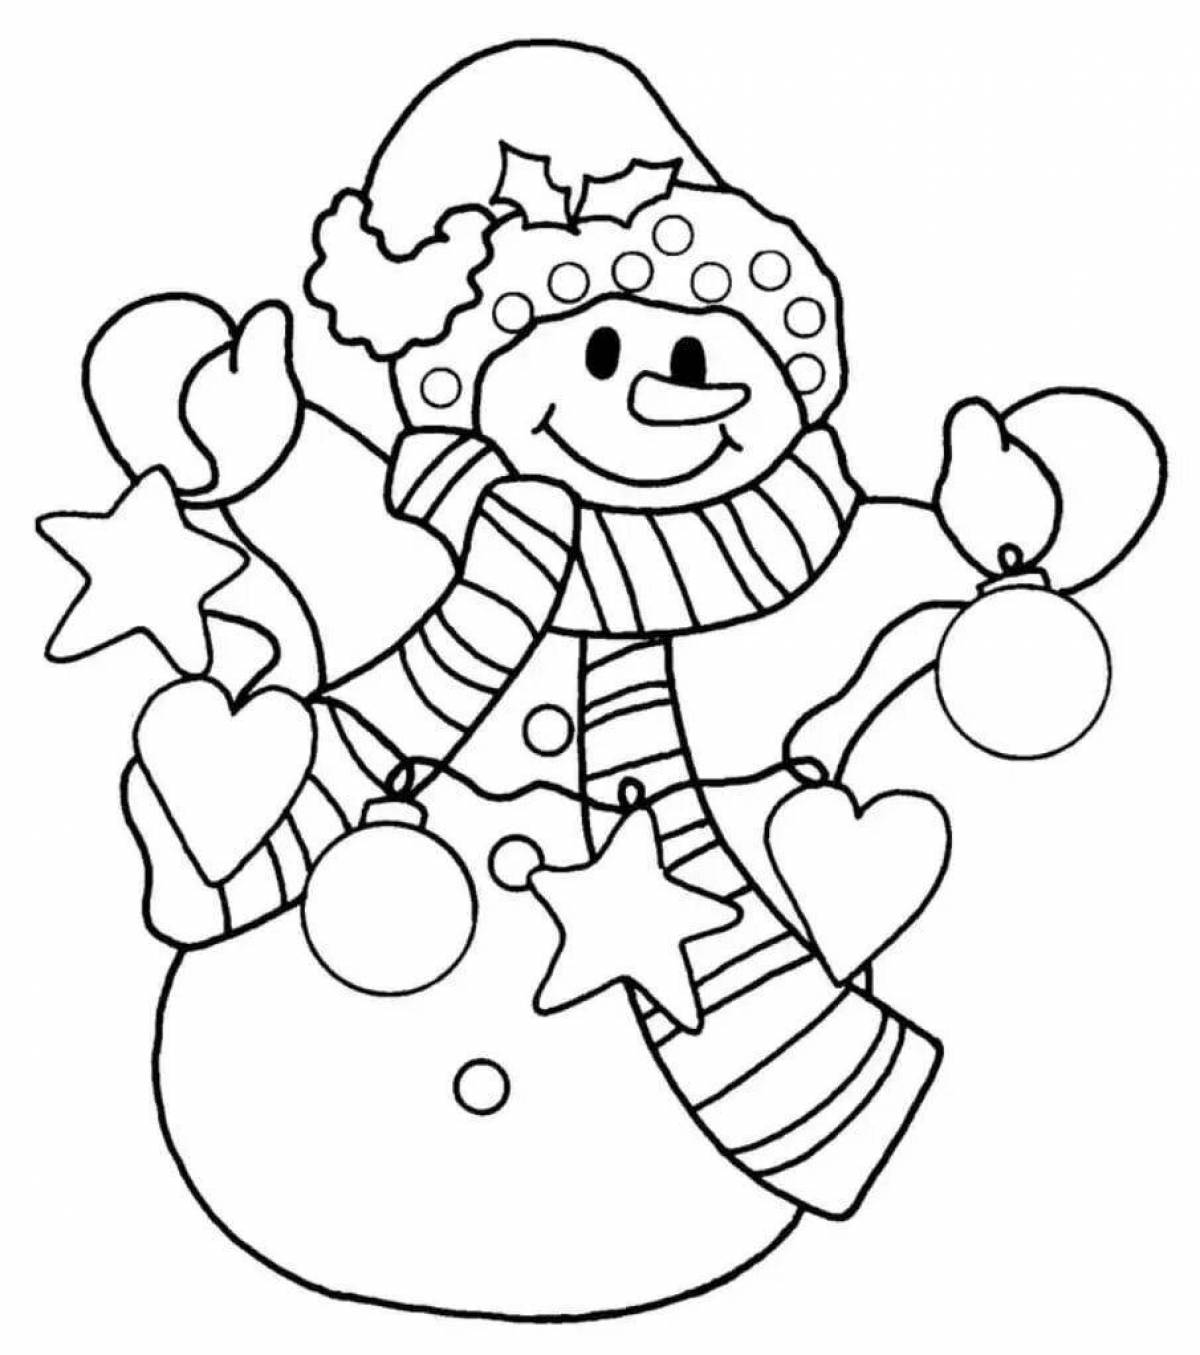 Coloring page joyful Christmas snowman